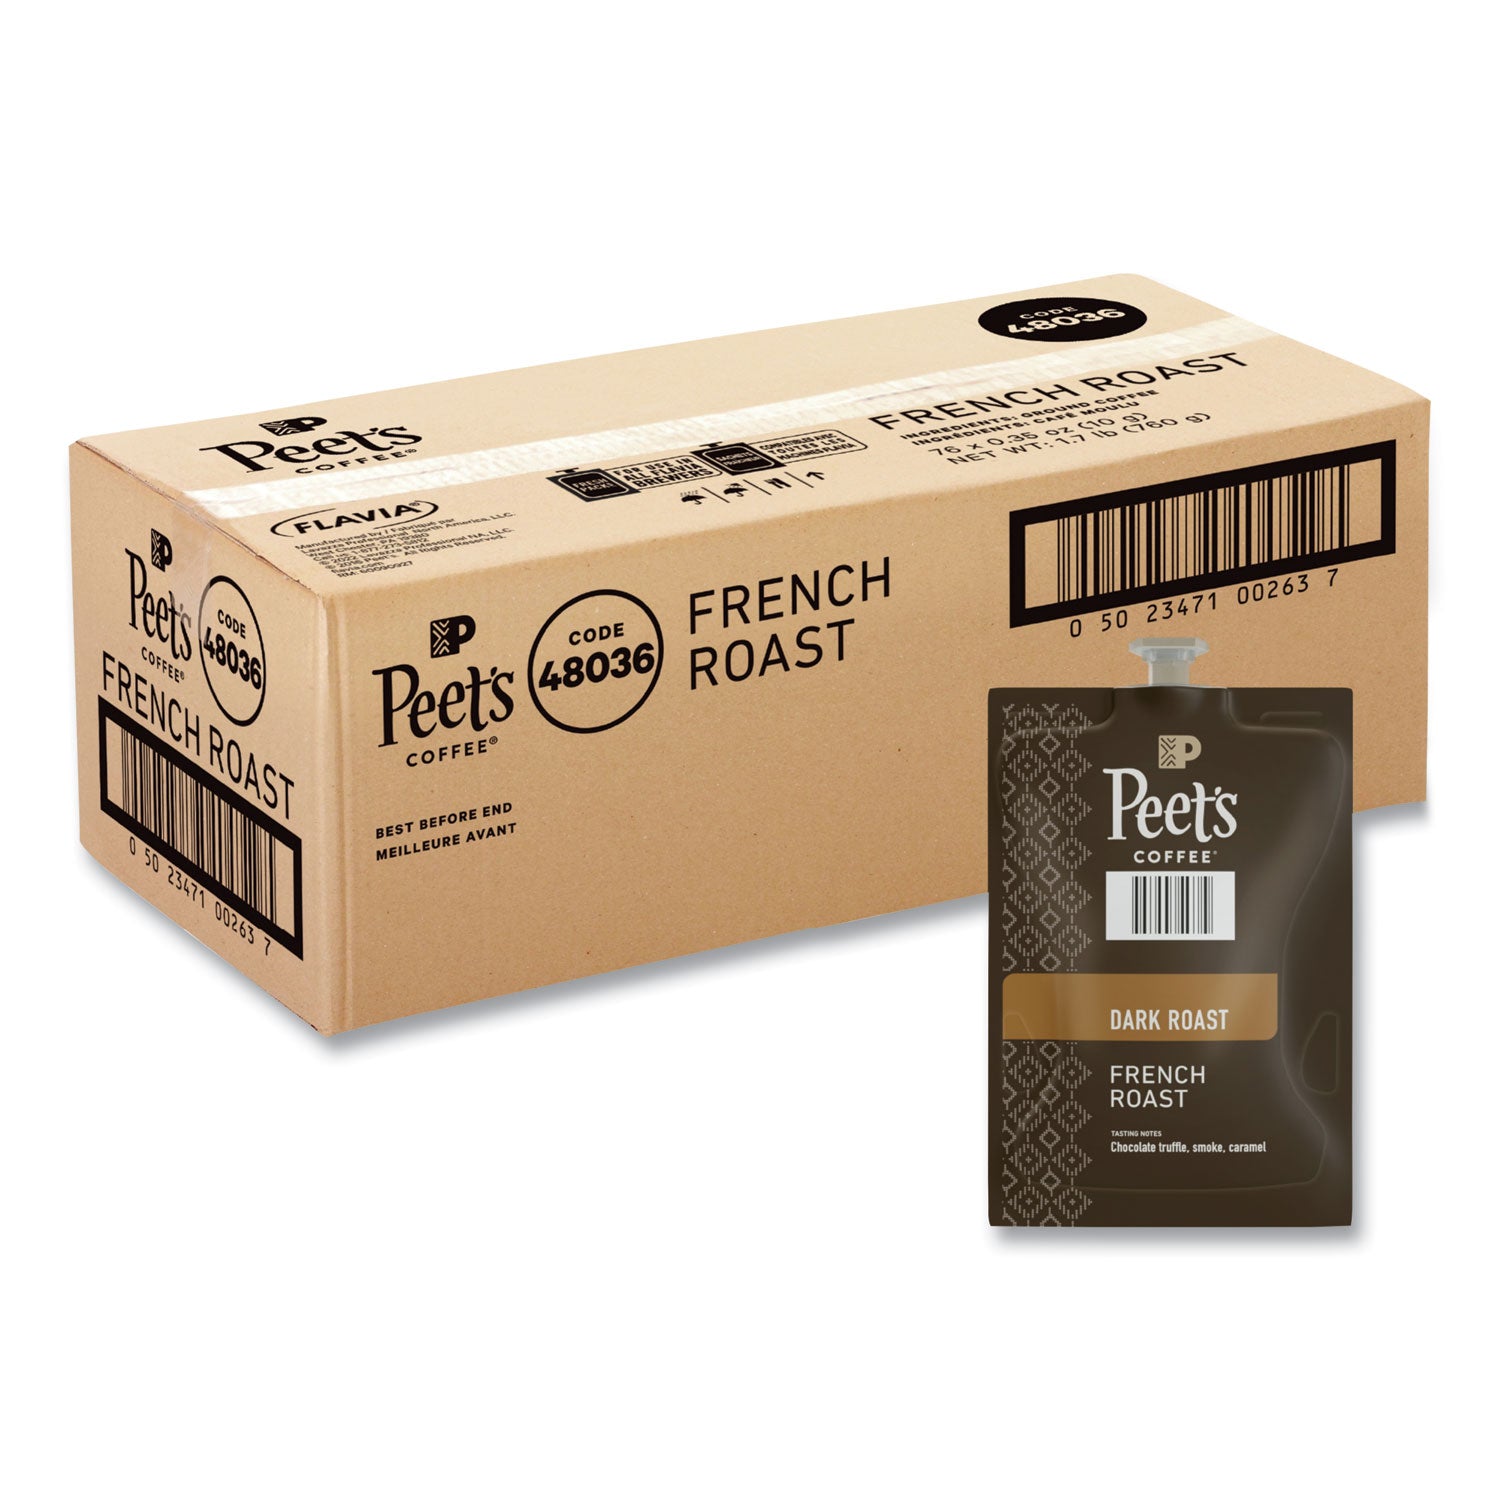 peets-french-roast-coffee-freshpack-french-roast-035-oz-pouch-76-carton_lav48036 - 1